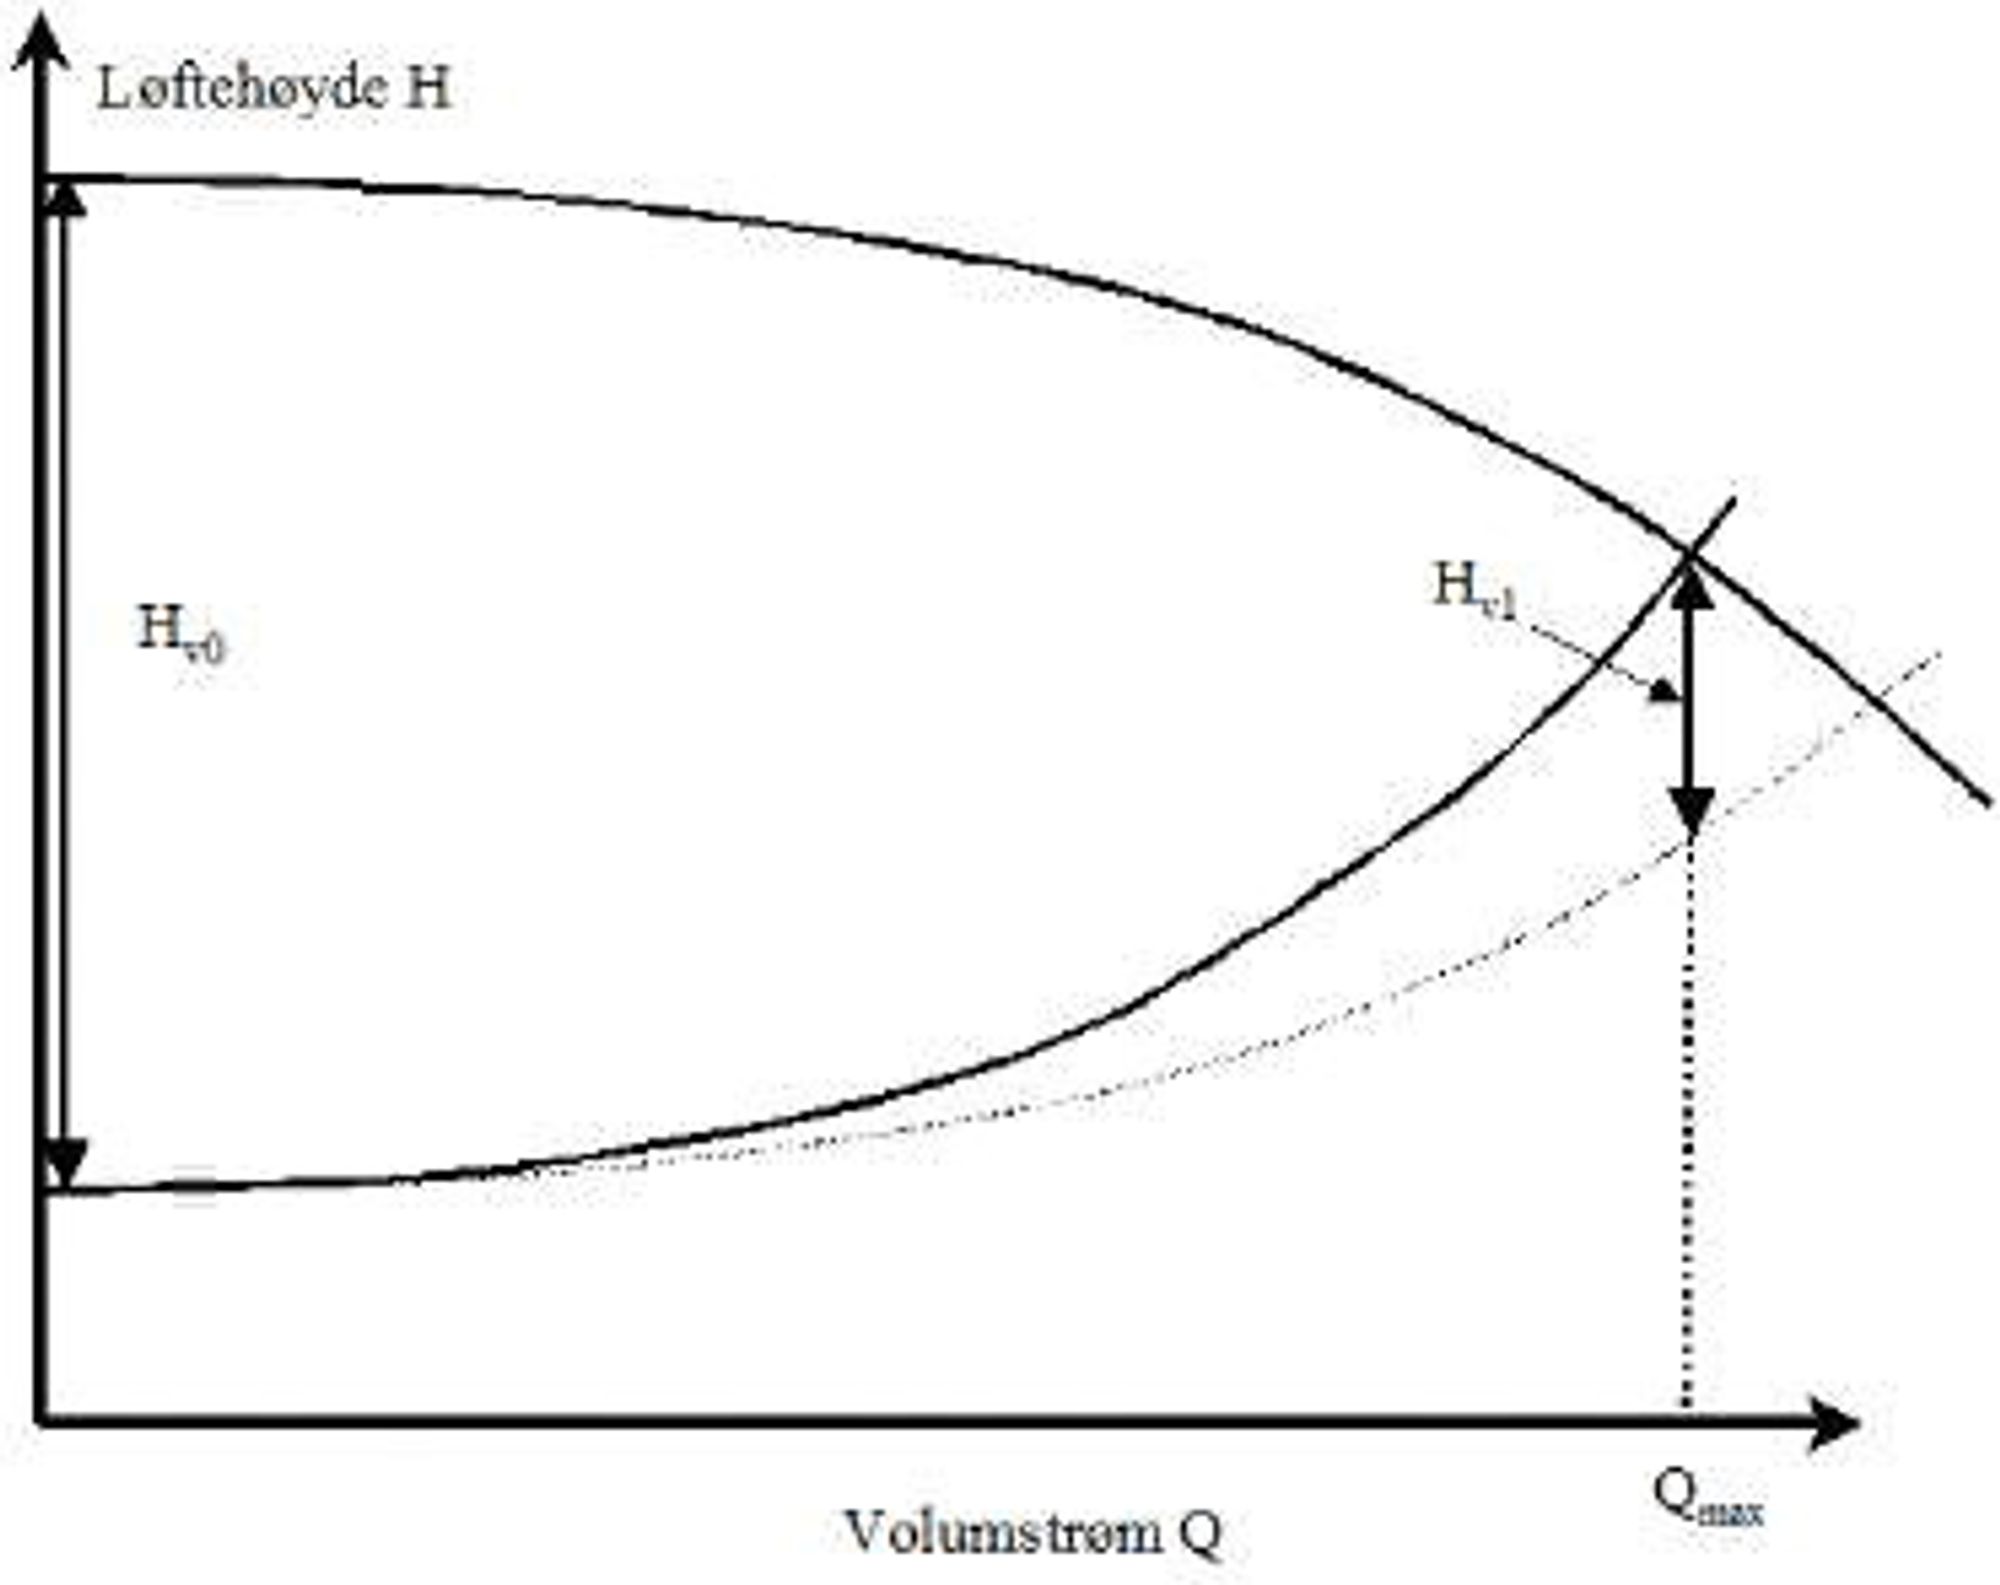 Sammenligning av trykkfallet ved maks. volumstrøm, Hv1,med trykkfallet ved stengt ventil, Hv0.